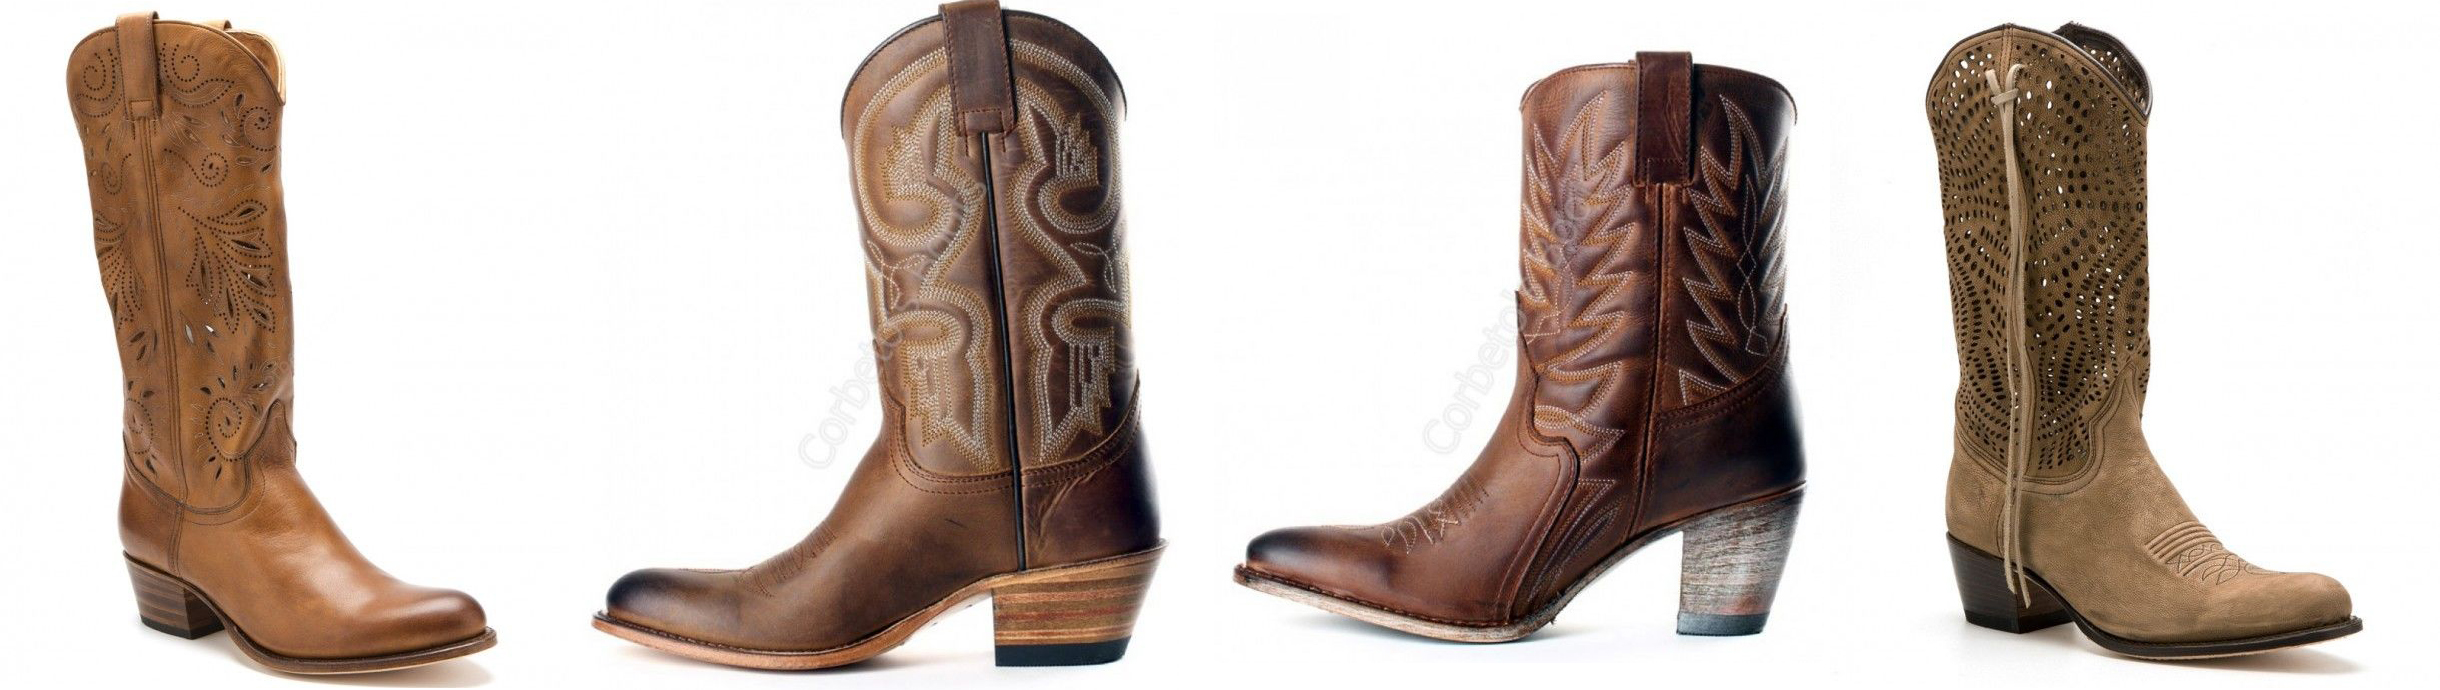 cowboy boot toe styles